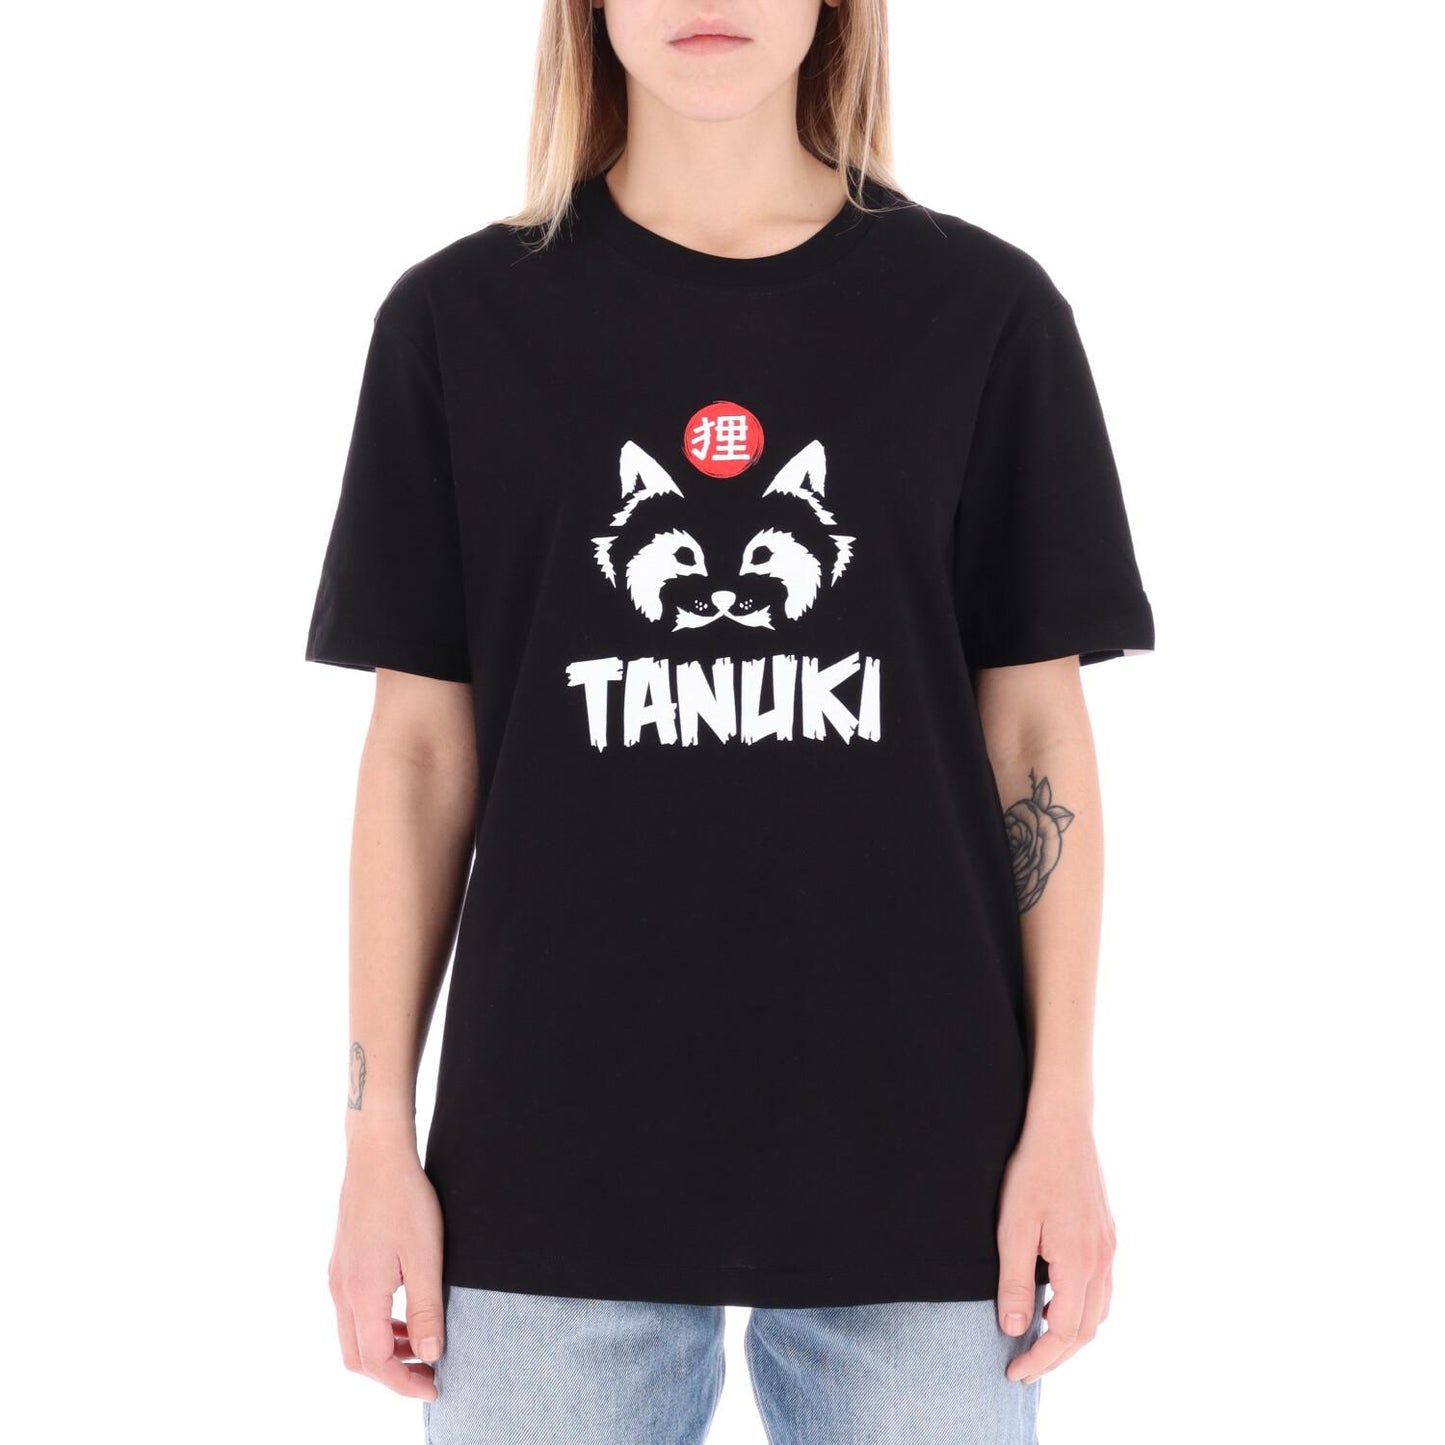 TANUKI T-SHIRT BIG FACE LOGO DONNA